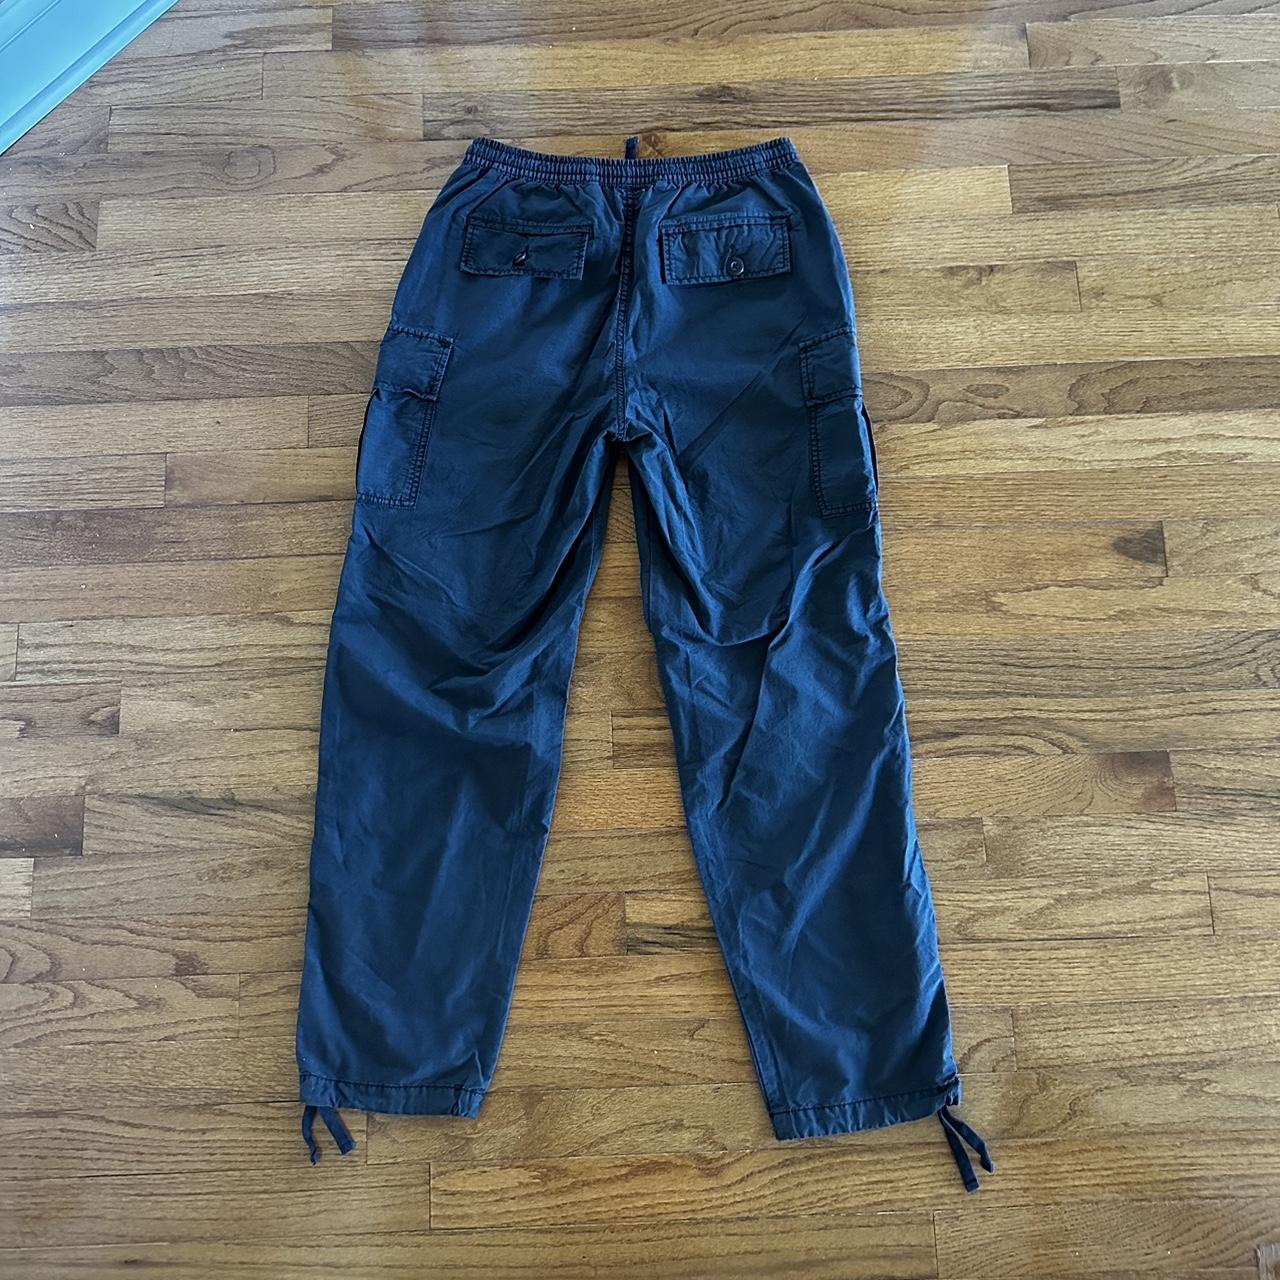 Urban Outfitters Men's Black Trousers | Depop